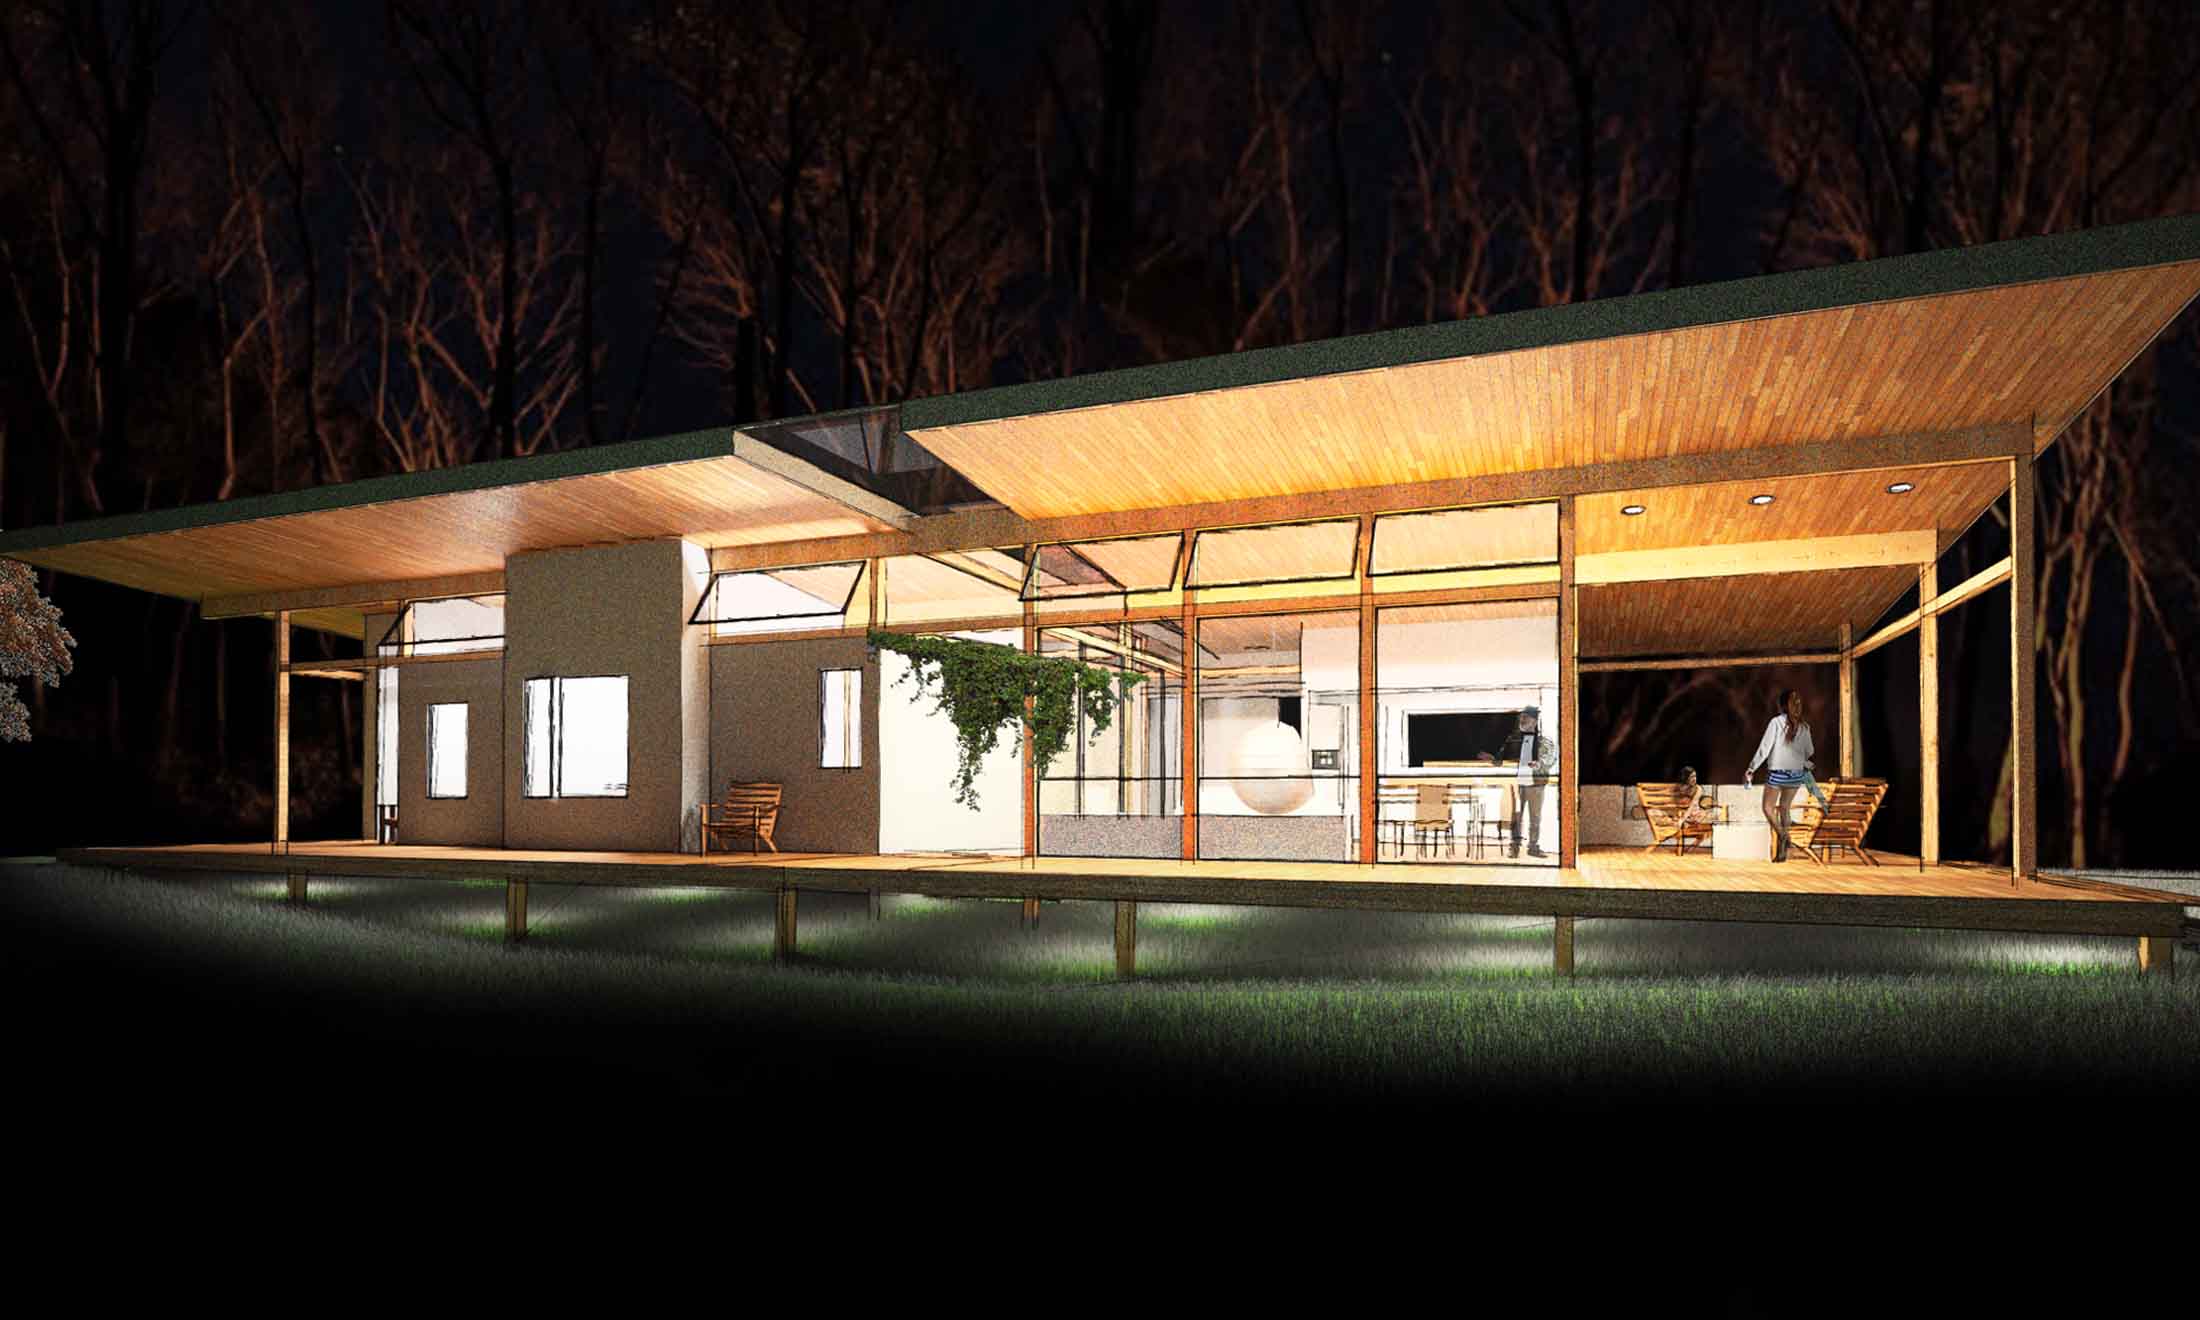 Skamania Co. Cabin, residential design